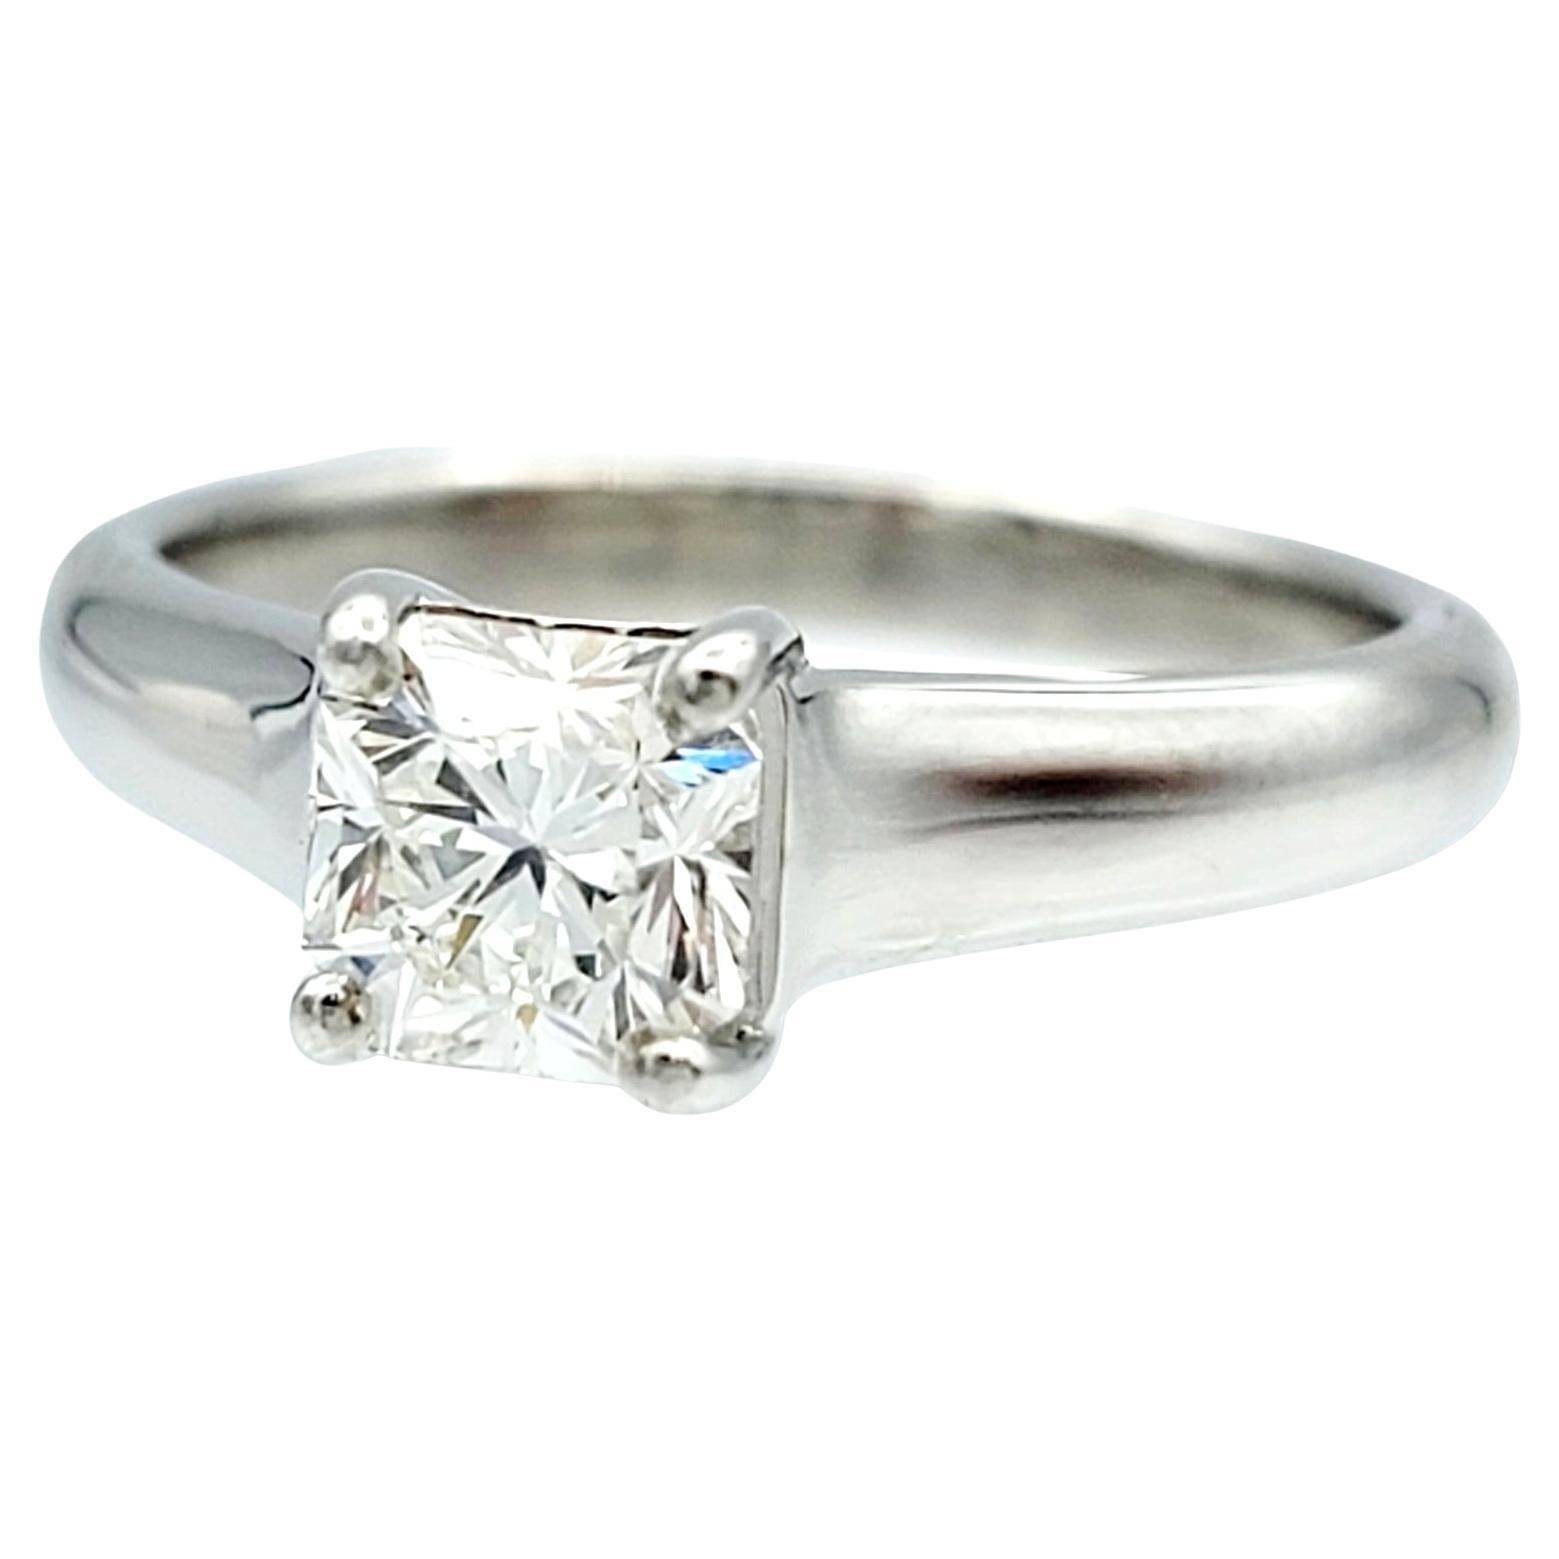 75 carat diamond ring